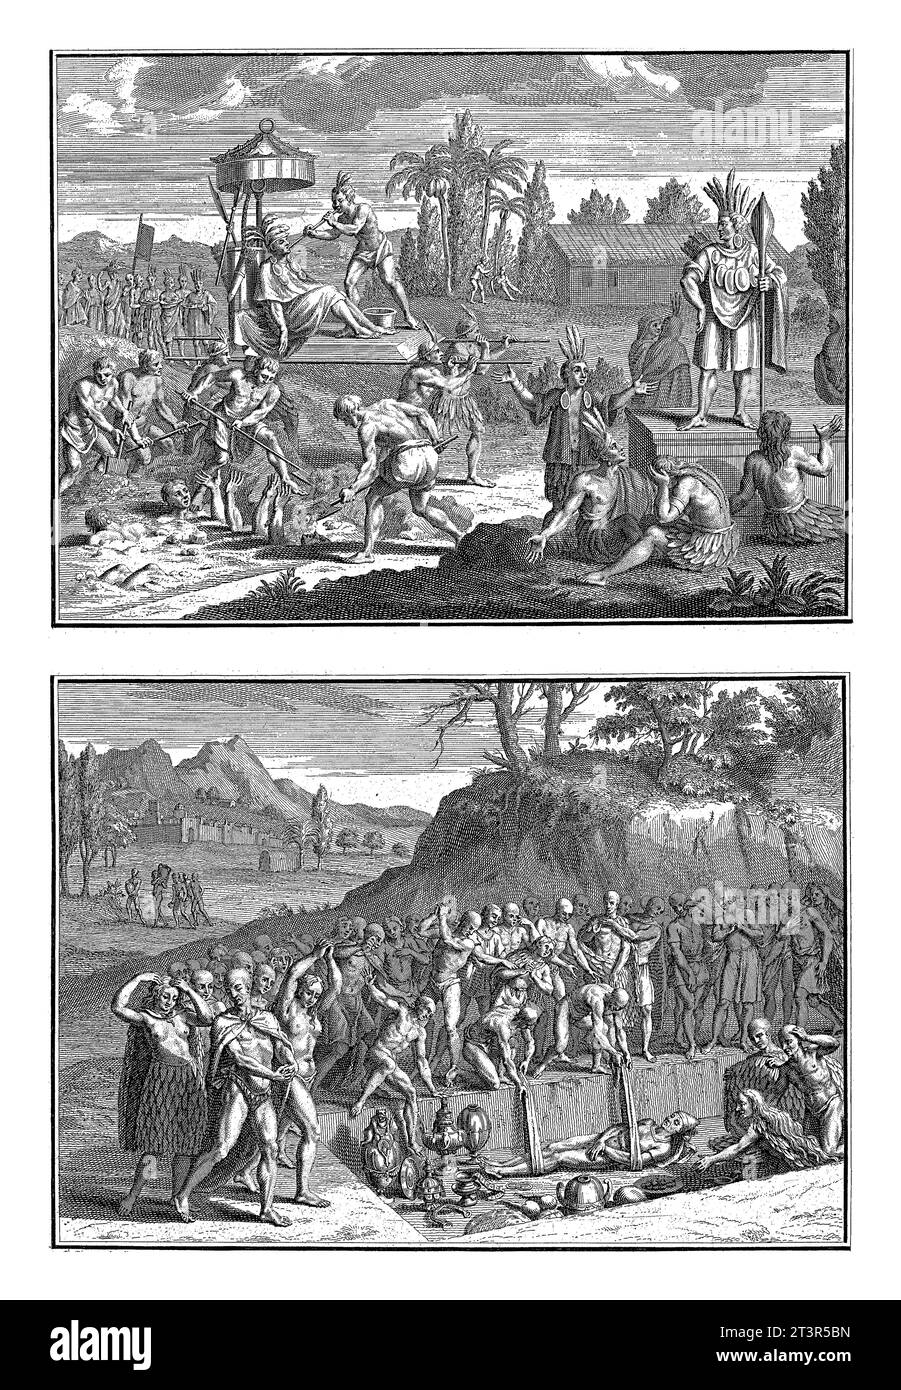 Peruanische Bestattungsrituale, Bernard Picart (Werkstatt), 1722 Blatt mit zwei Darstellungen peruanischer Bestattungsrituale. Stockfoto